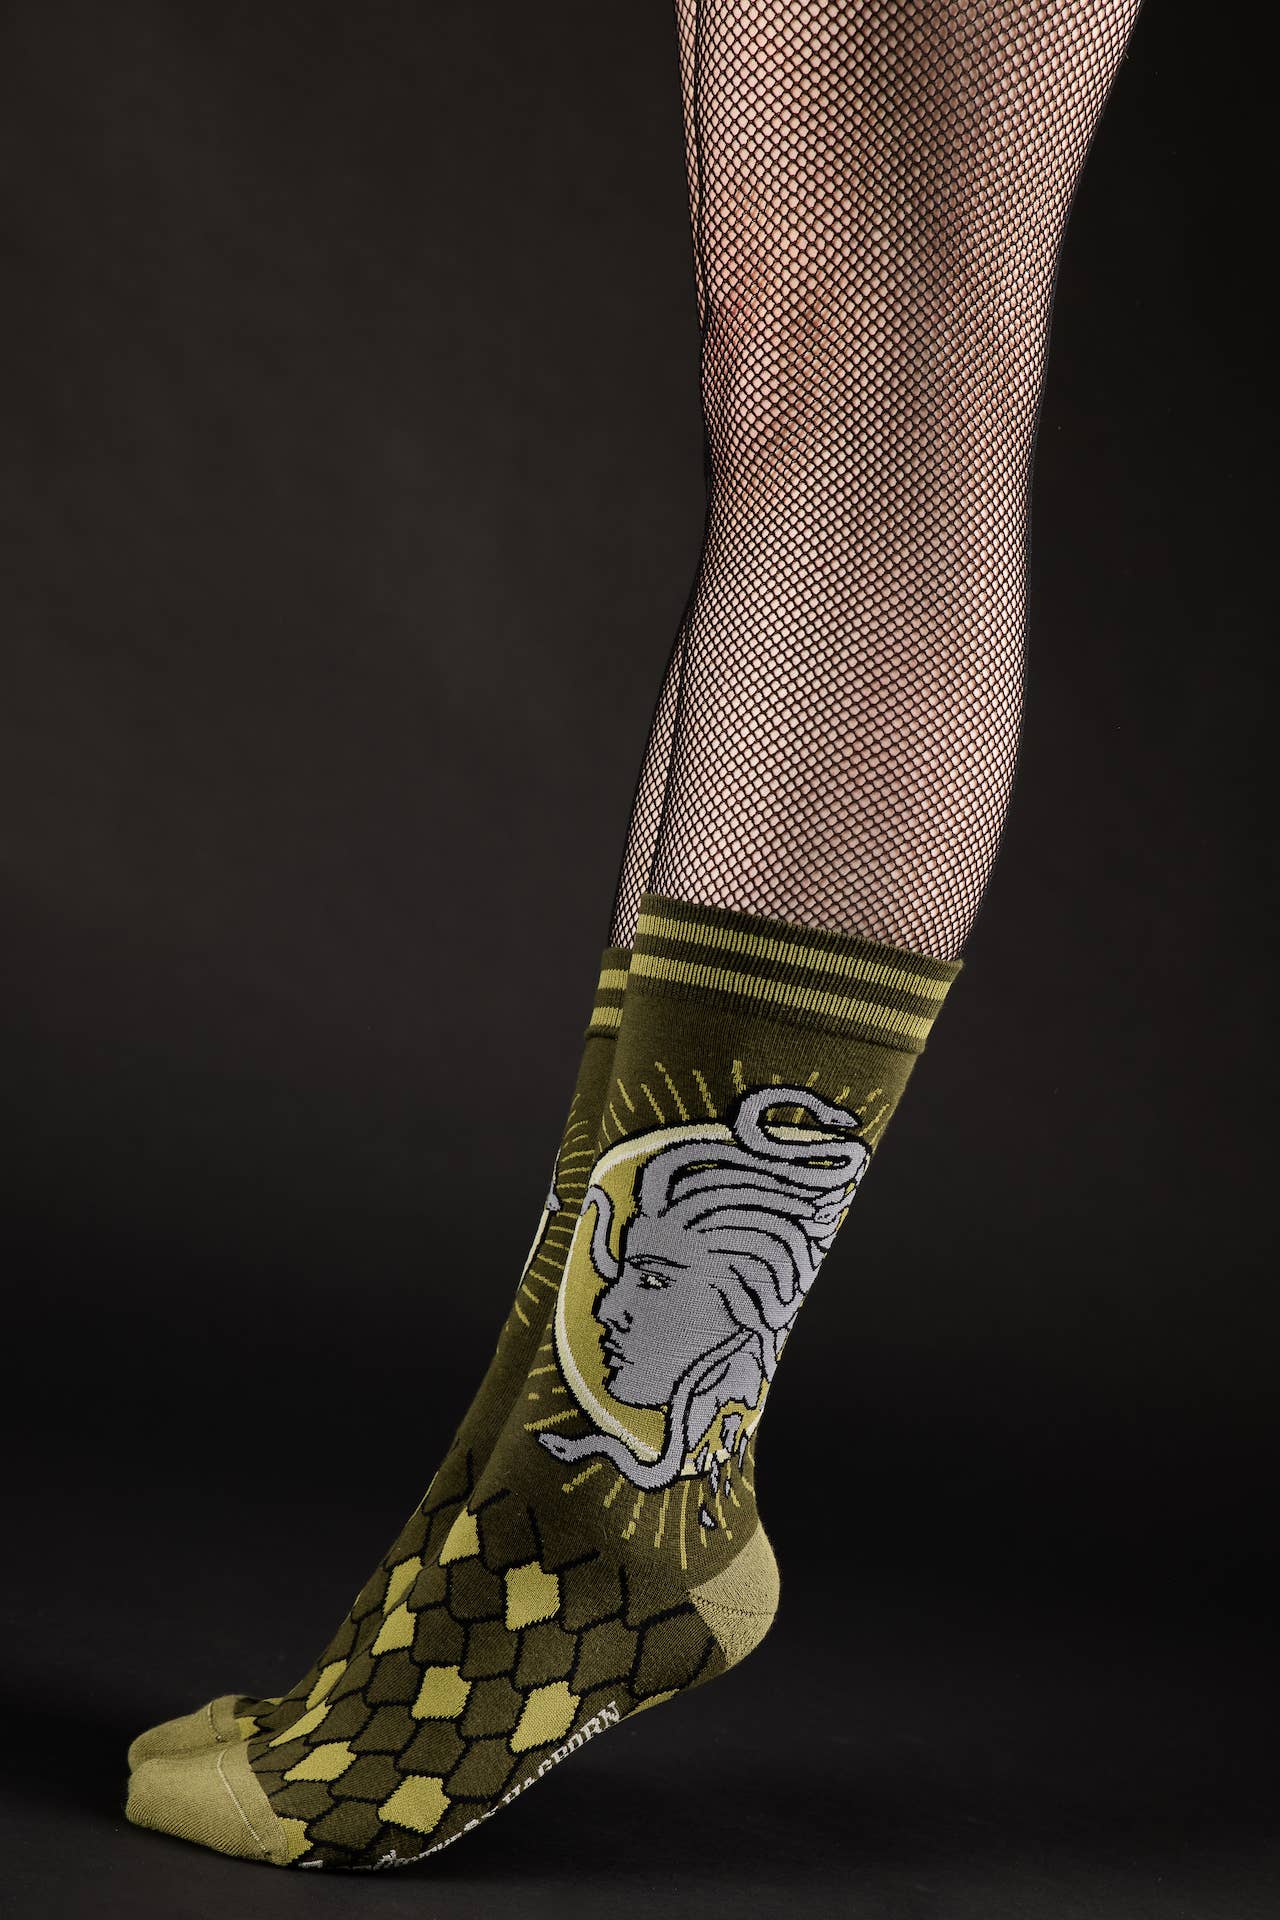 Medusa FootClothes x Hagborn Collab Socks